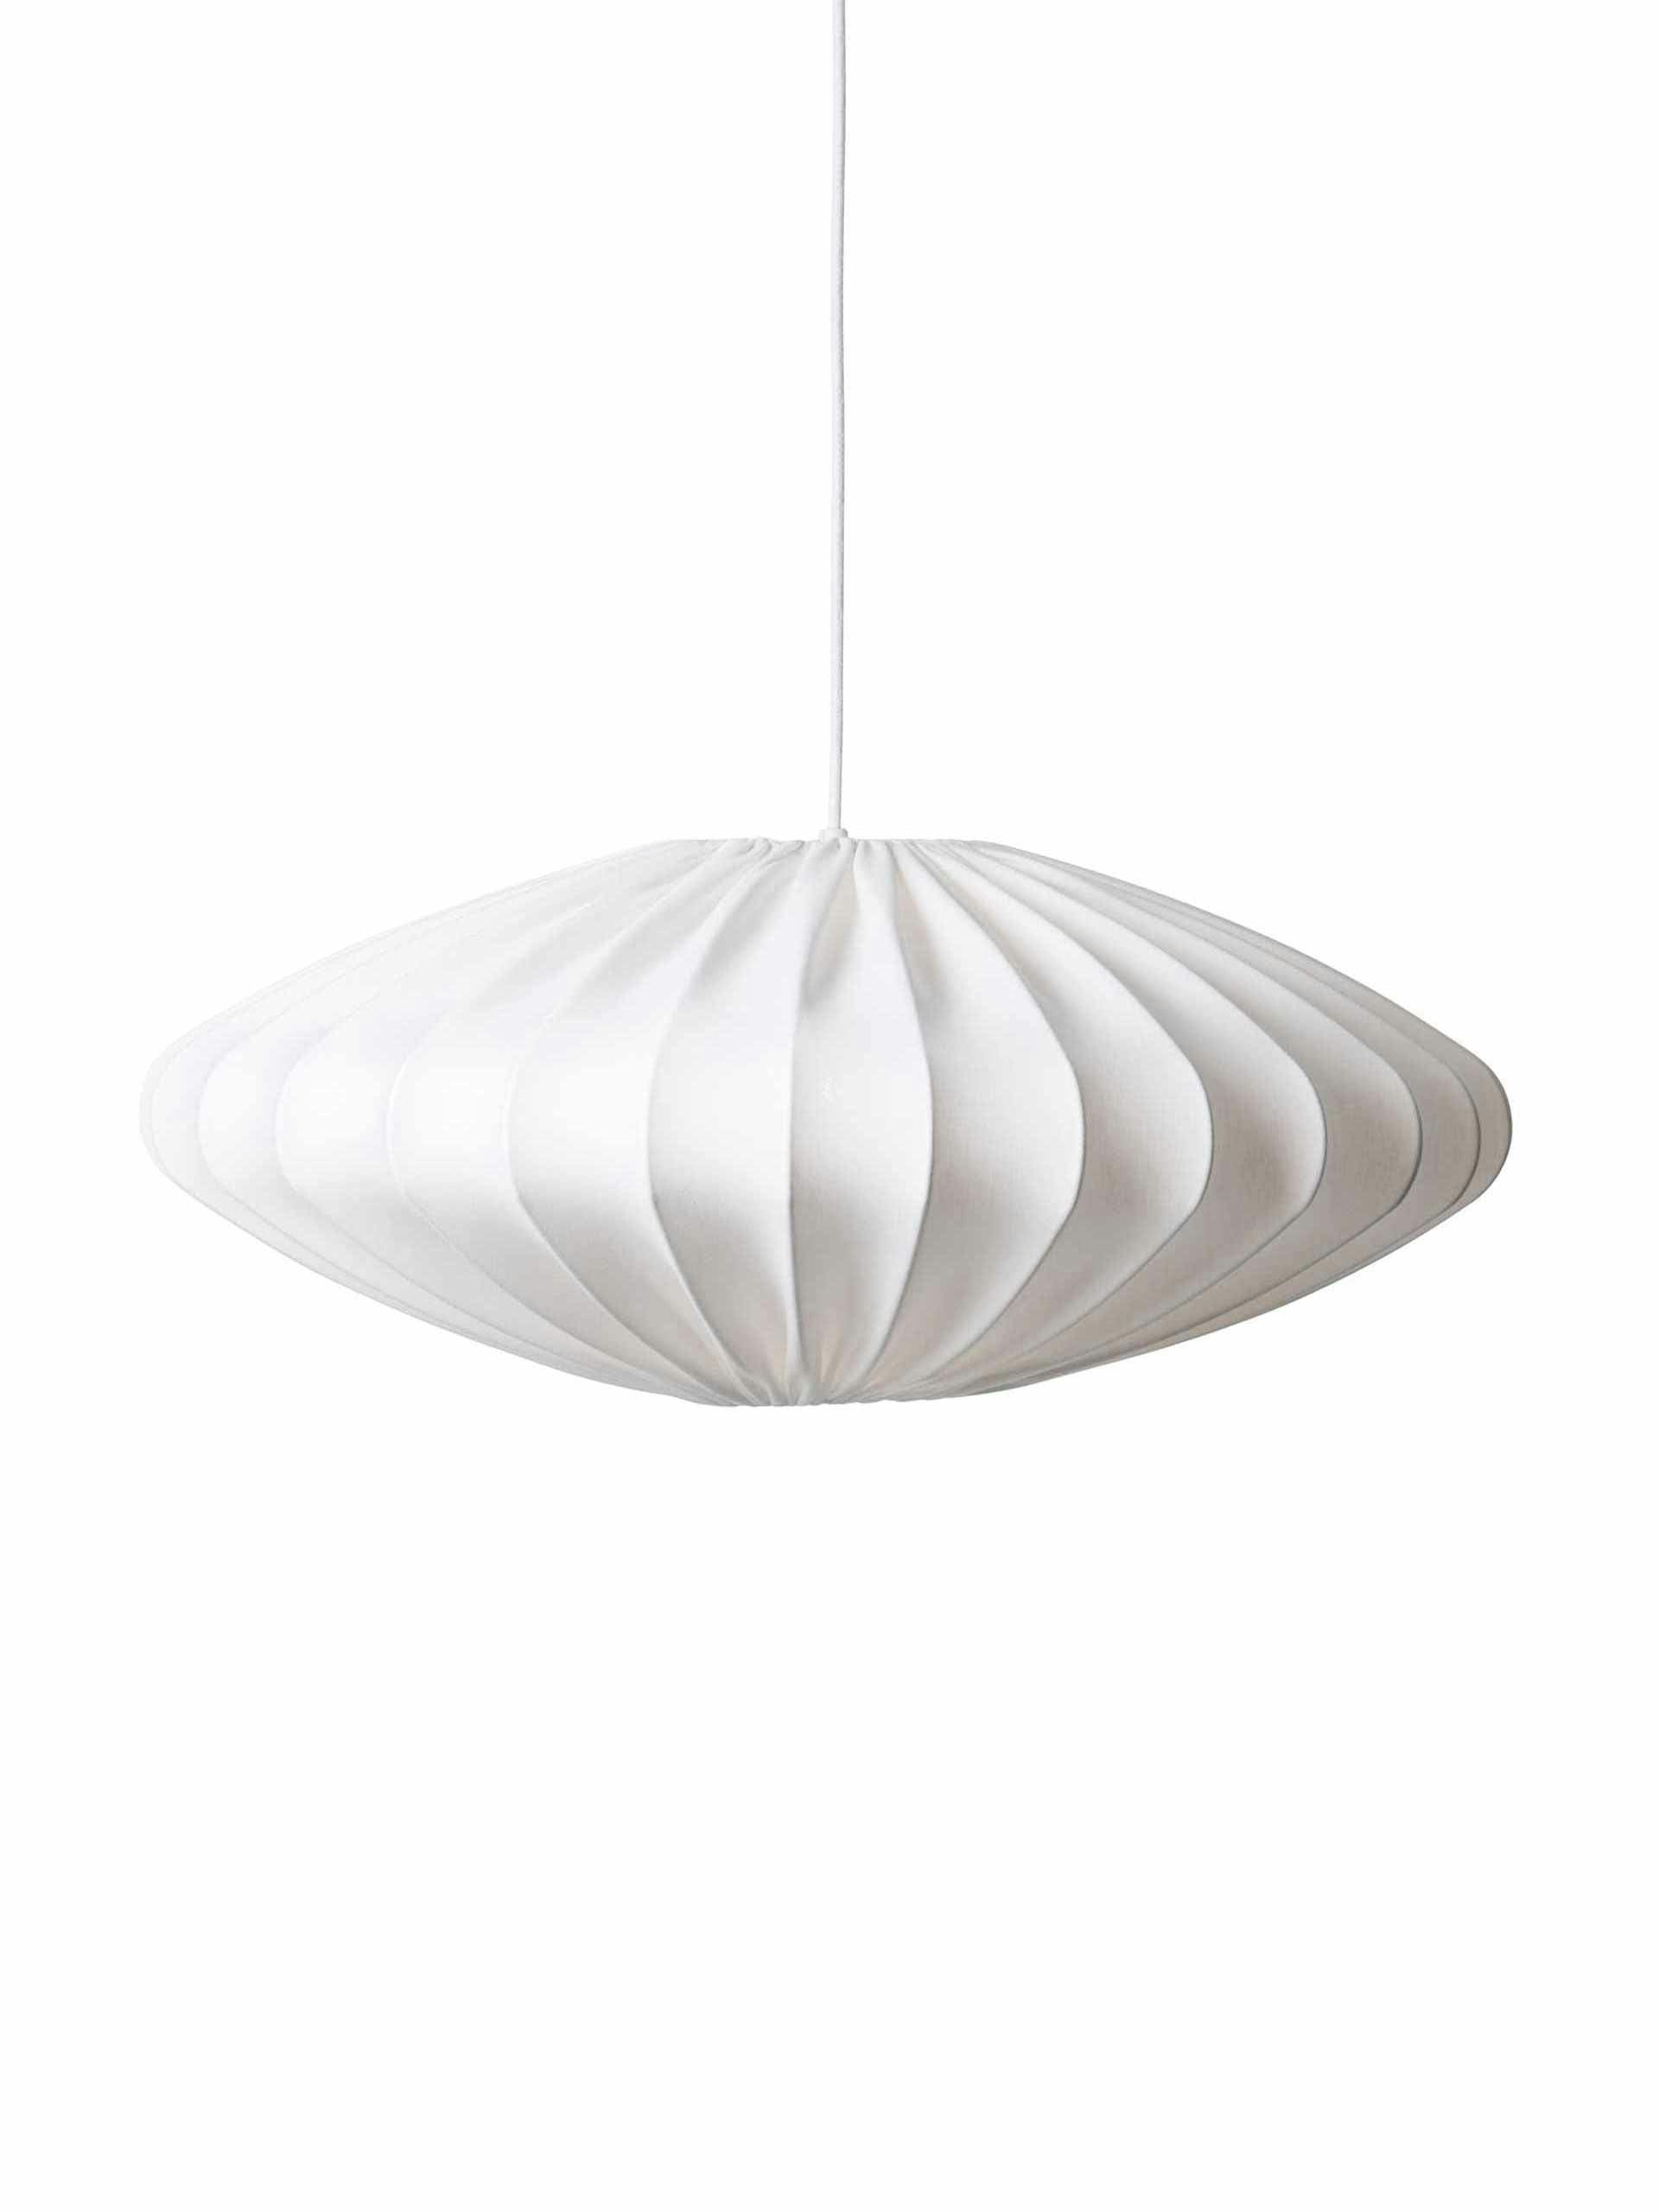 Oval shape lamp shade